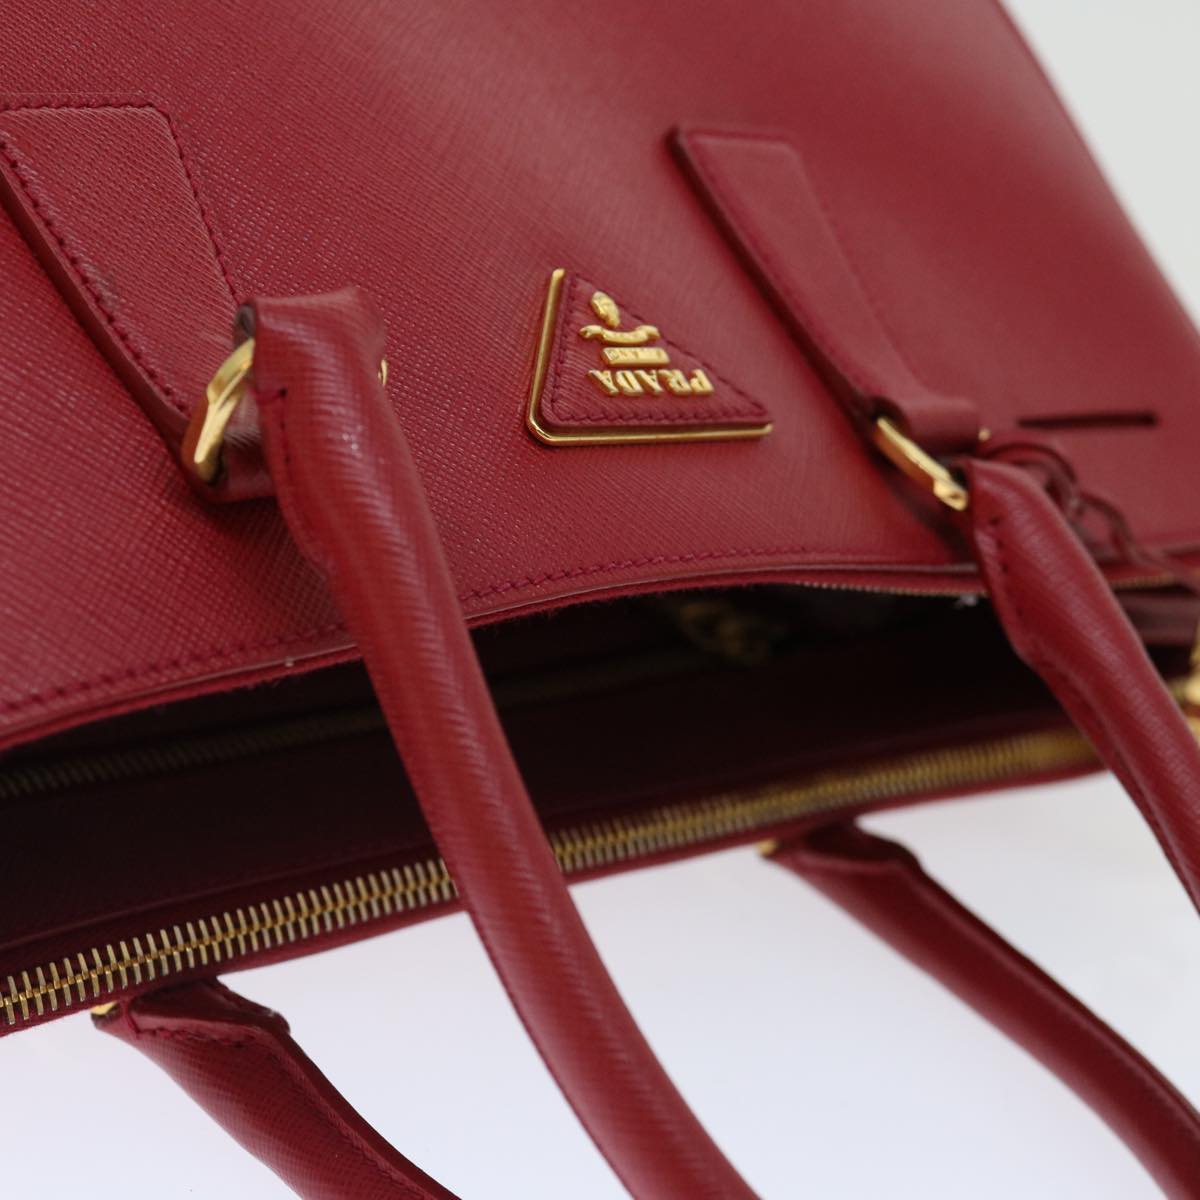 PRADA Galleria Hand Bag Safiano leather Red Auth am6067